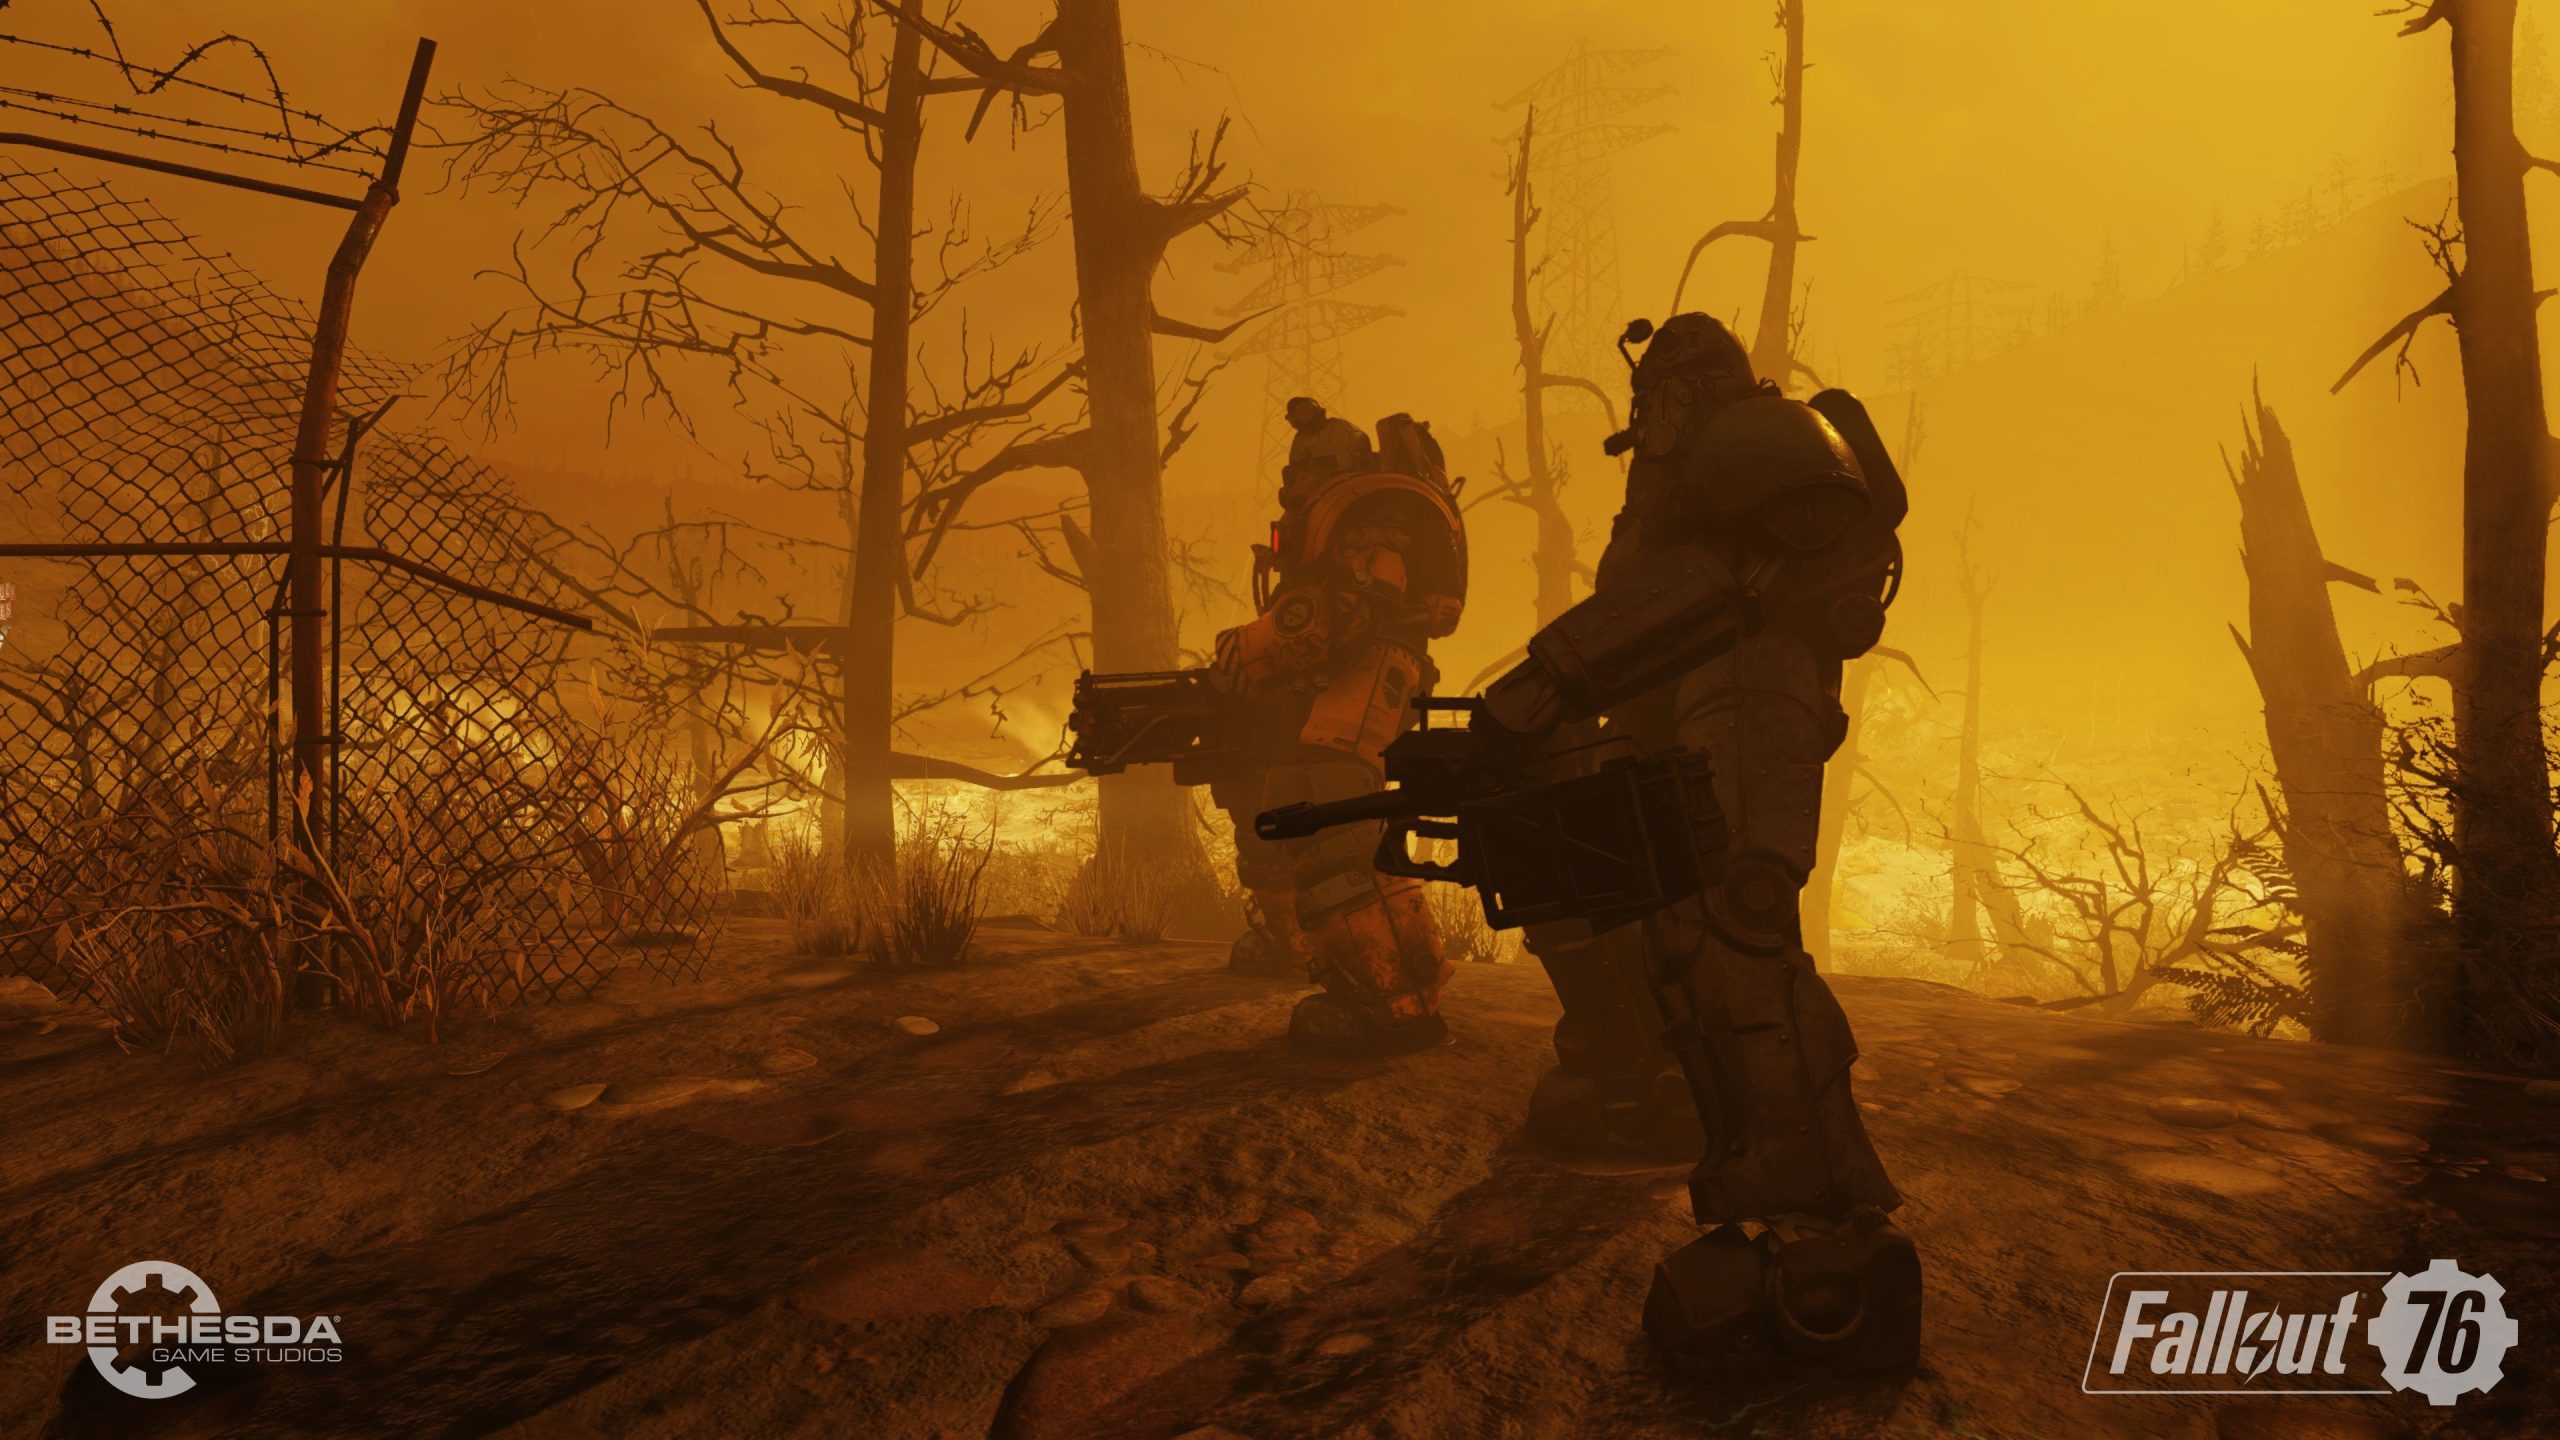 play3 Review: Fallout 76 im Test: Die Enttäuschung des Jahres!?